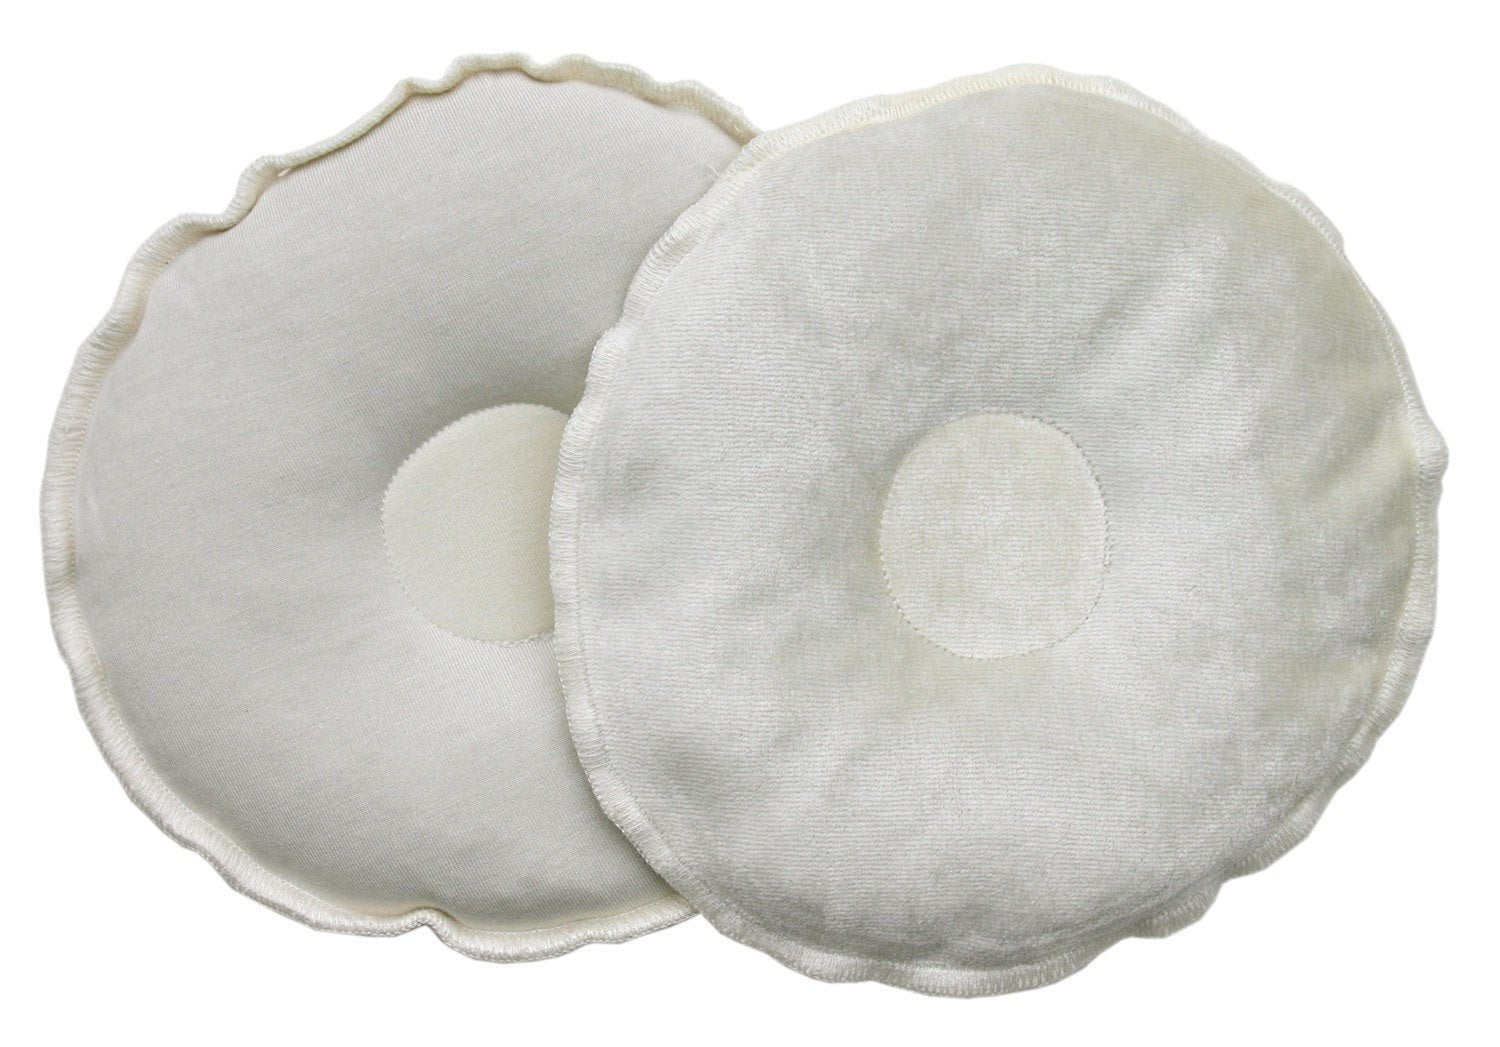 breast heating pad for breastfeeding, breast ice packs